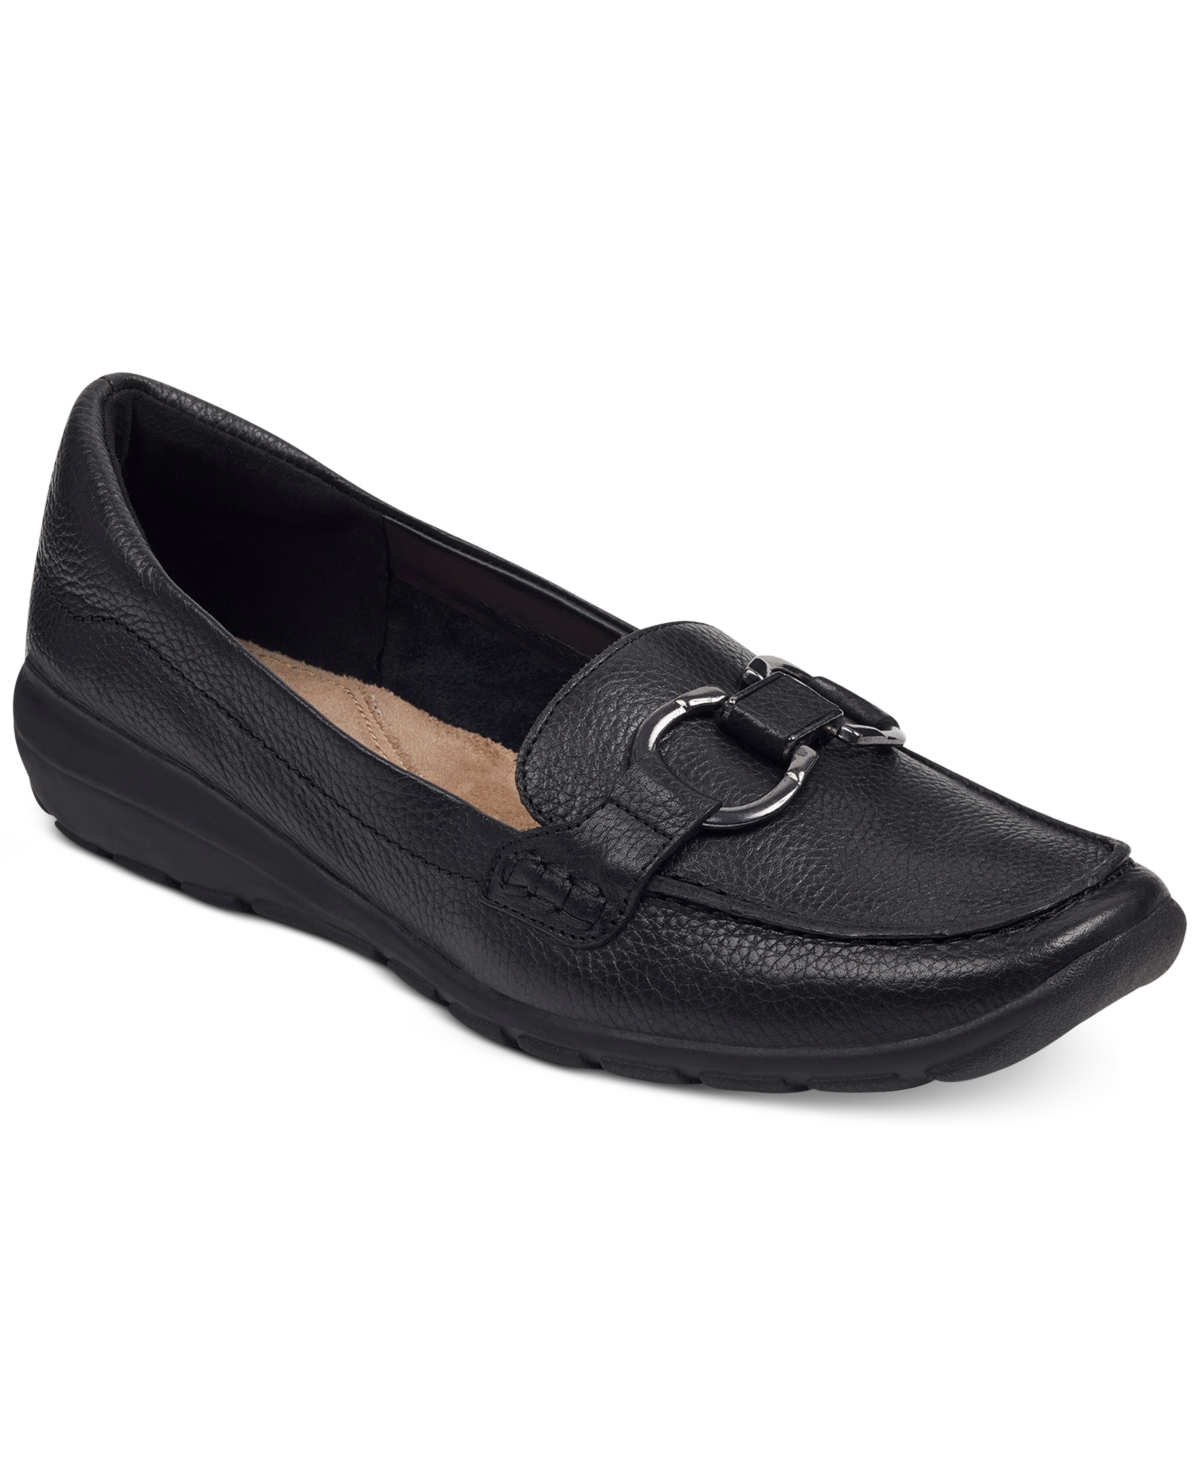 Women's Avienta Slip-on Casual Flat Loafers - Black Leather